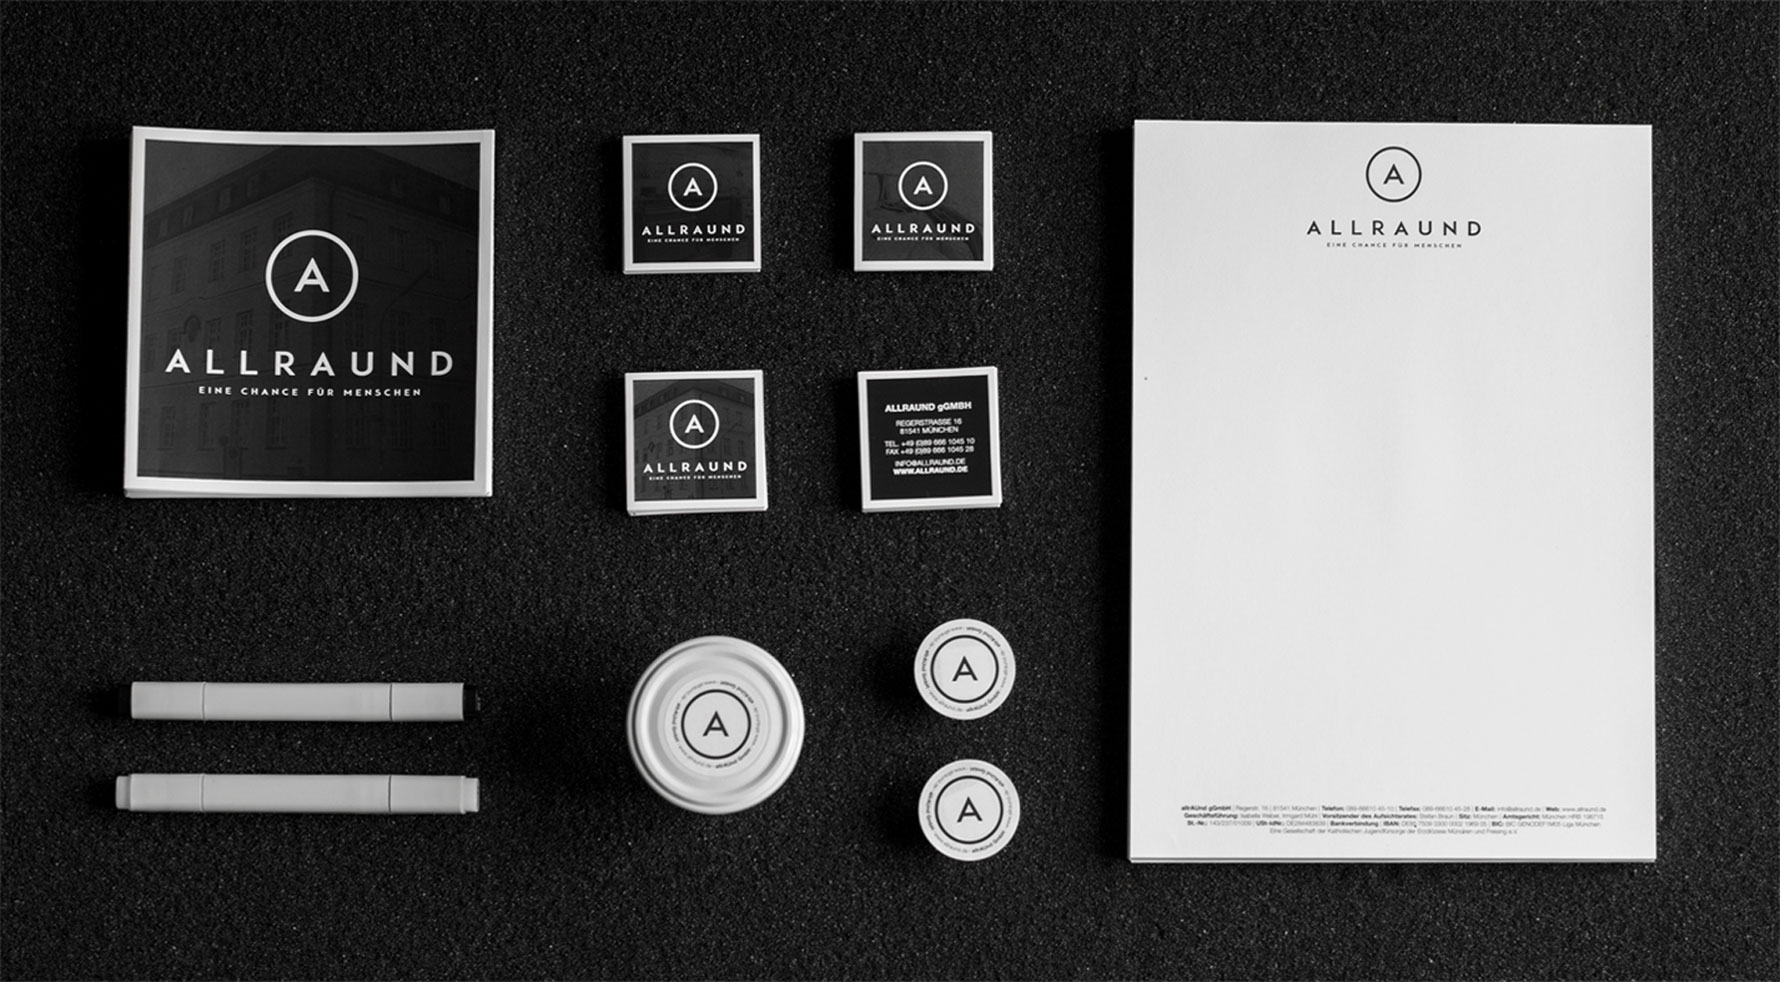 Hüfner Design | Referenz AllrAUnd gGmbH | Corporate Identity